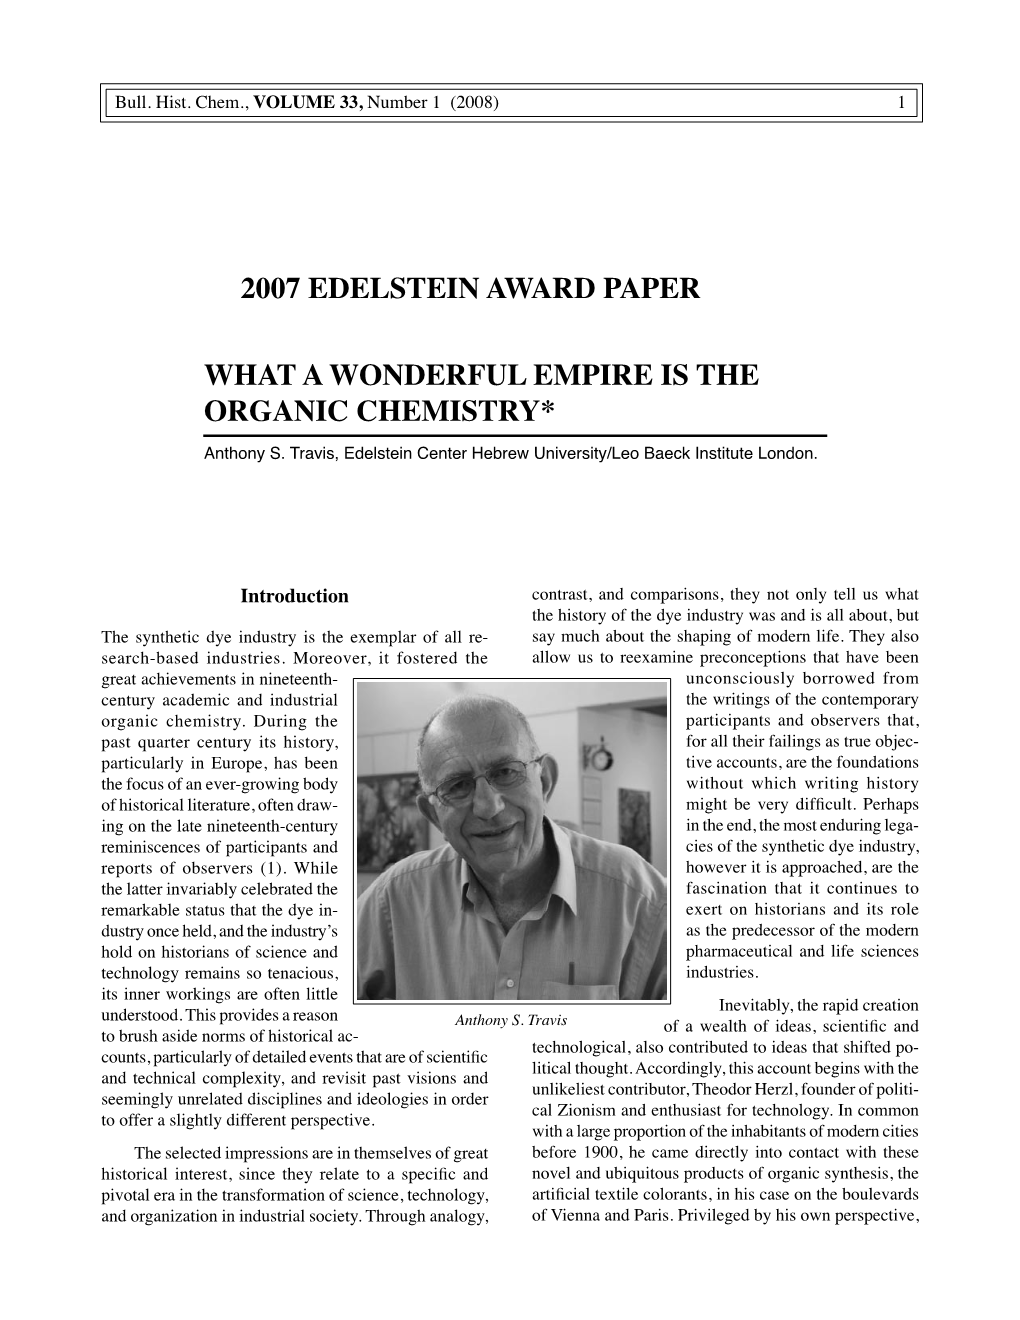 2007 Edelstein Award Paper